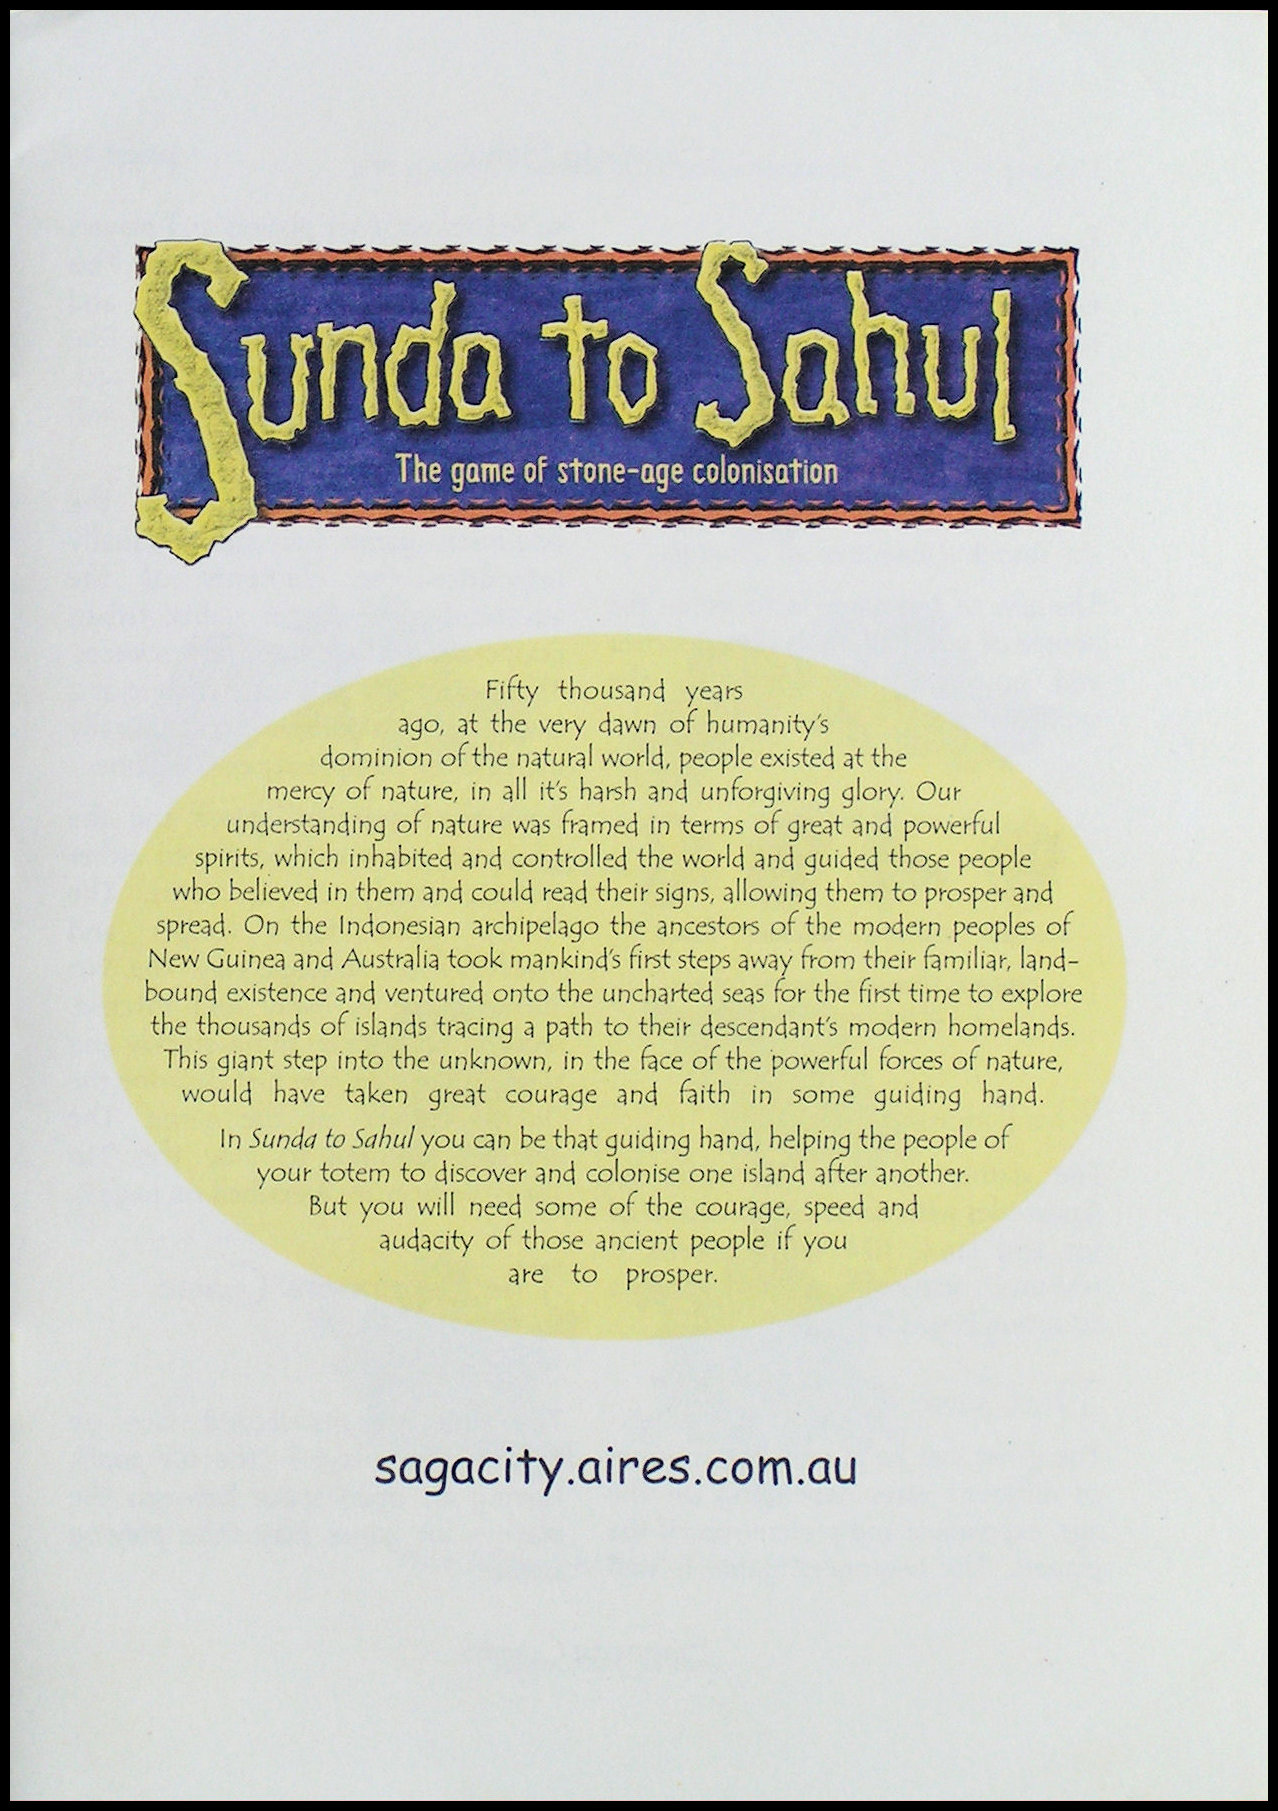 Sunda To Sahul - Rulebook Cover